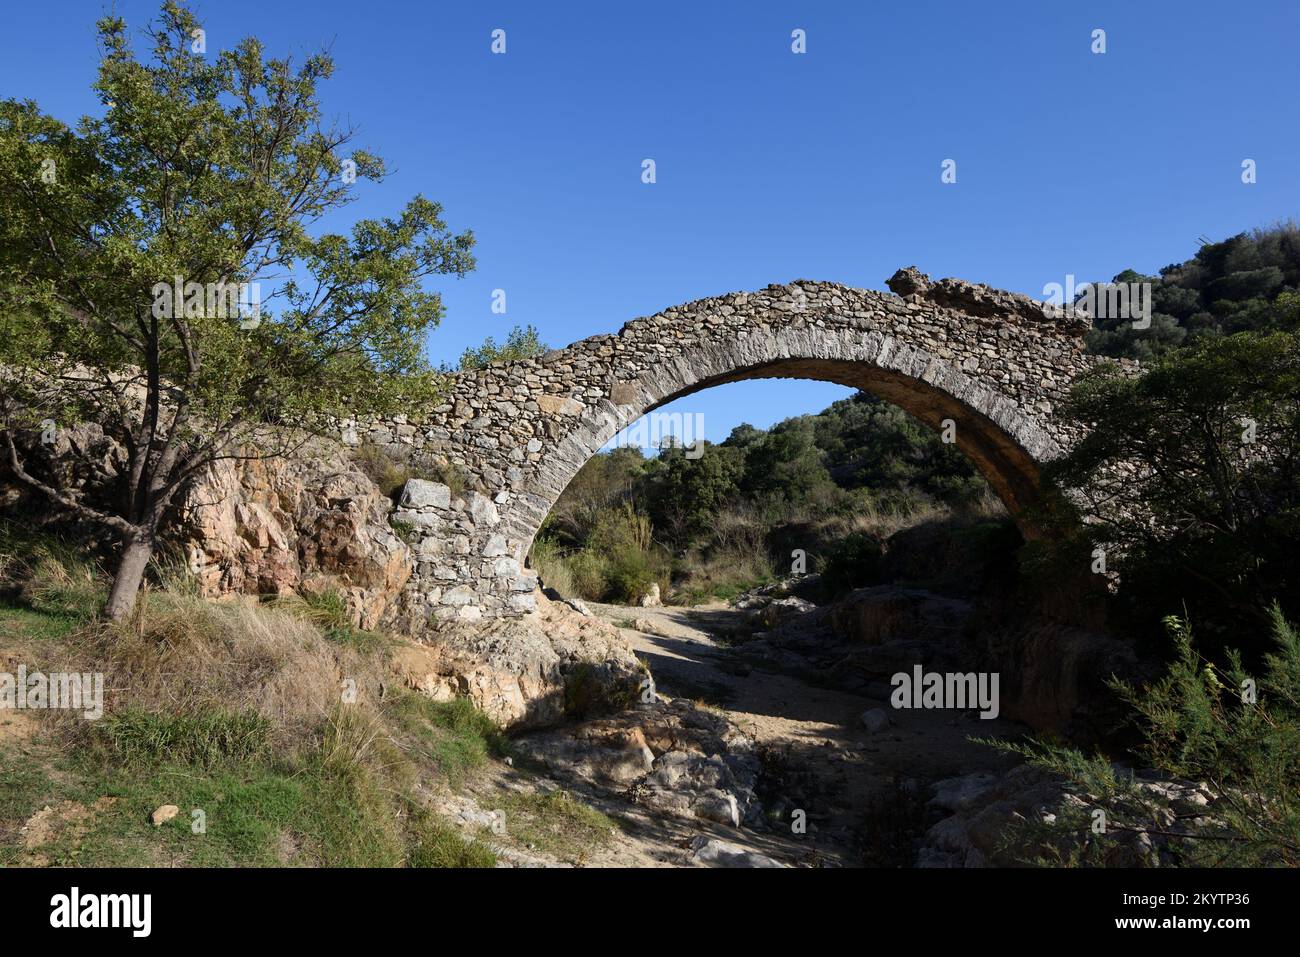 Old Stone Bridge or Humpback Bridge, Pont des Fées, over the River La Garde, Grimaud Var Provence France Stock Photo